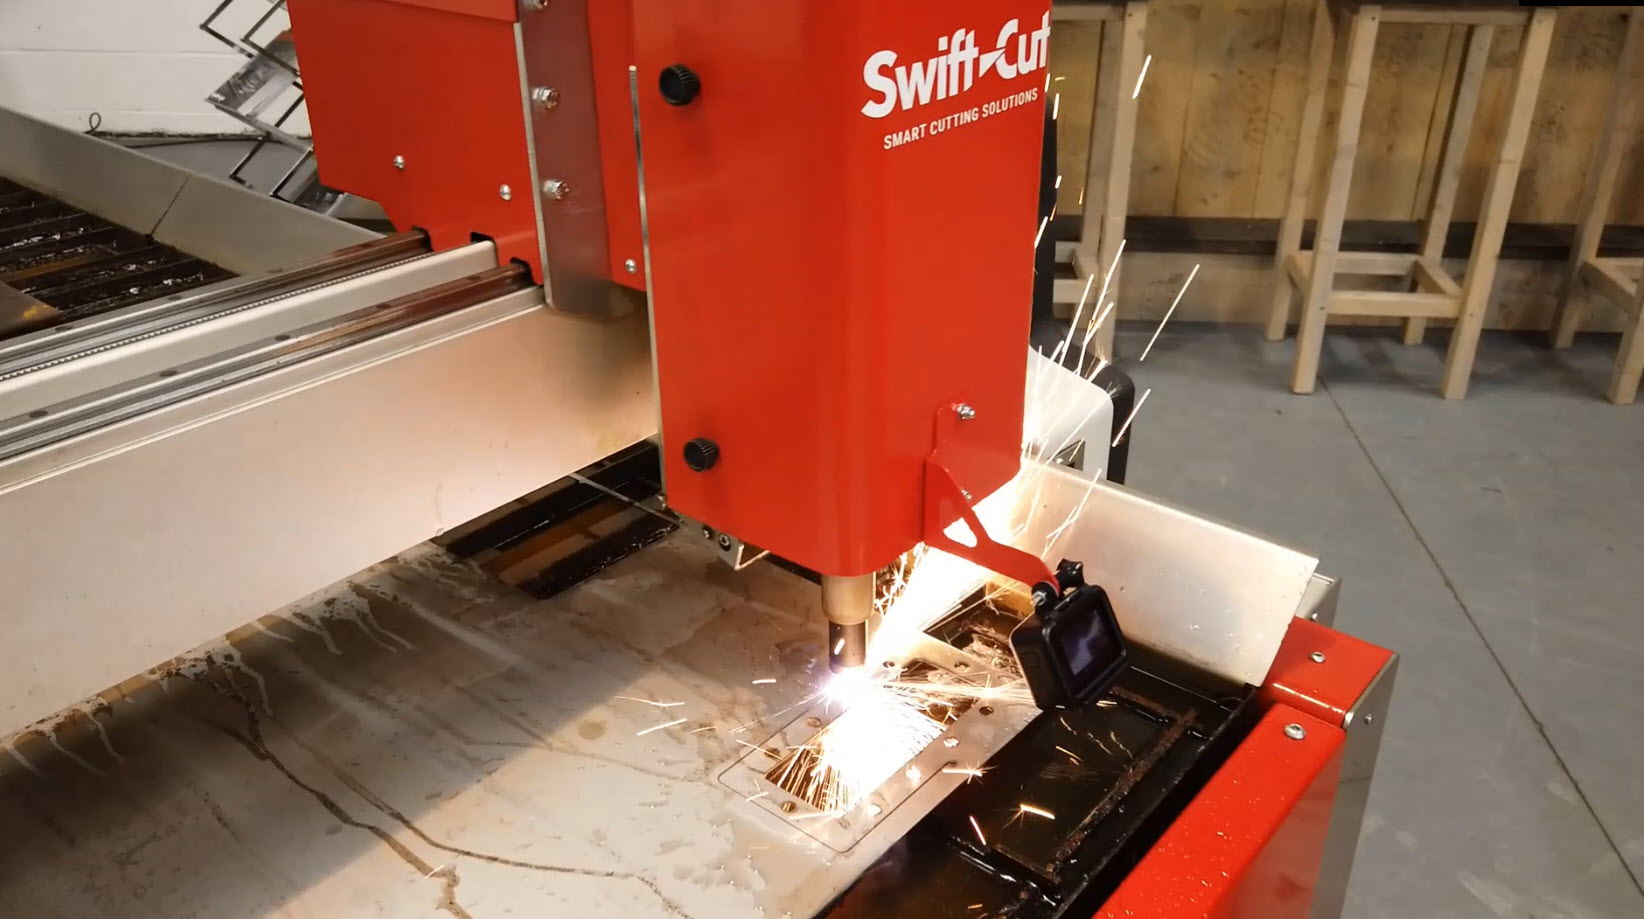 Swift-Cut Pro mesa de corte CNC de 1,5 mm corte de metal com faíscas